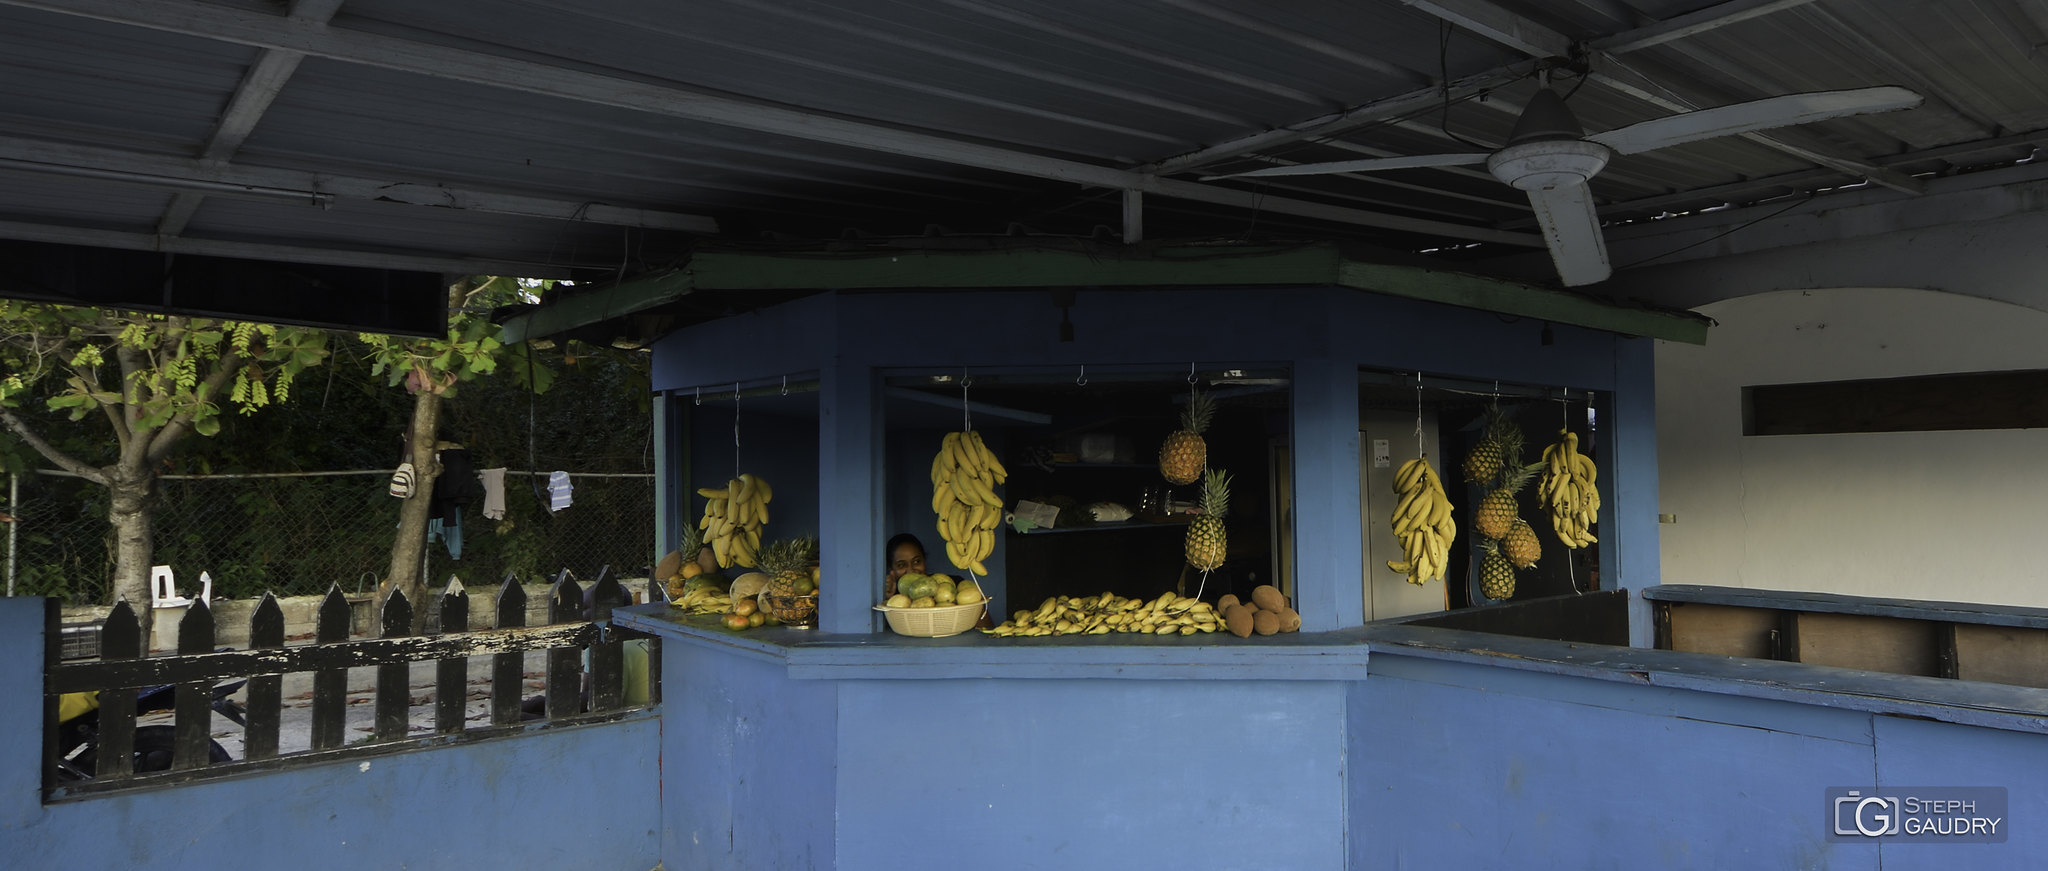 Bleu/jaune - les bananes [Click to start slideshow]